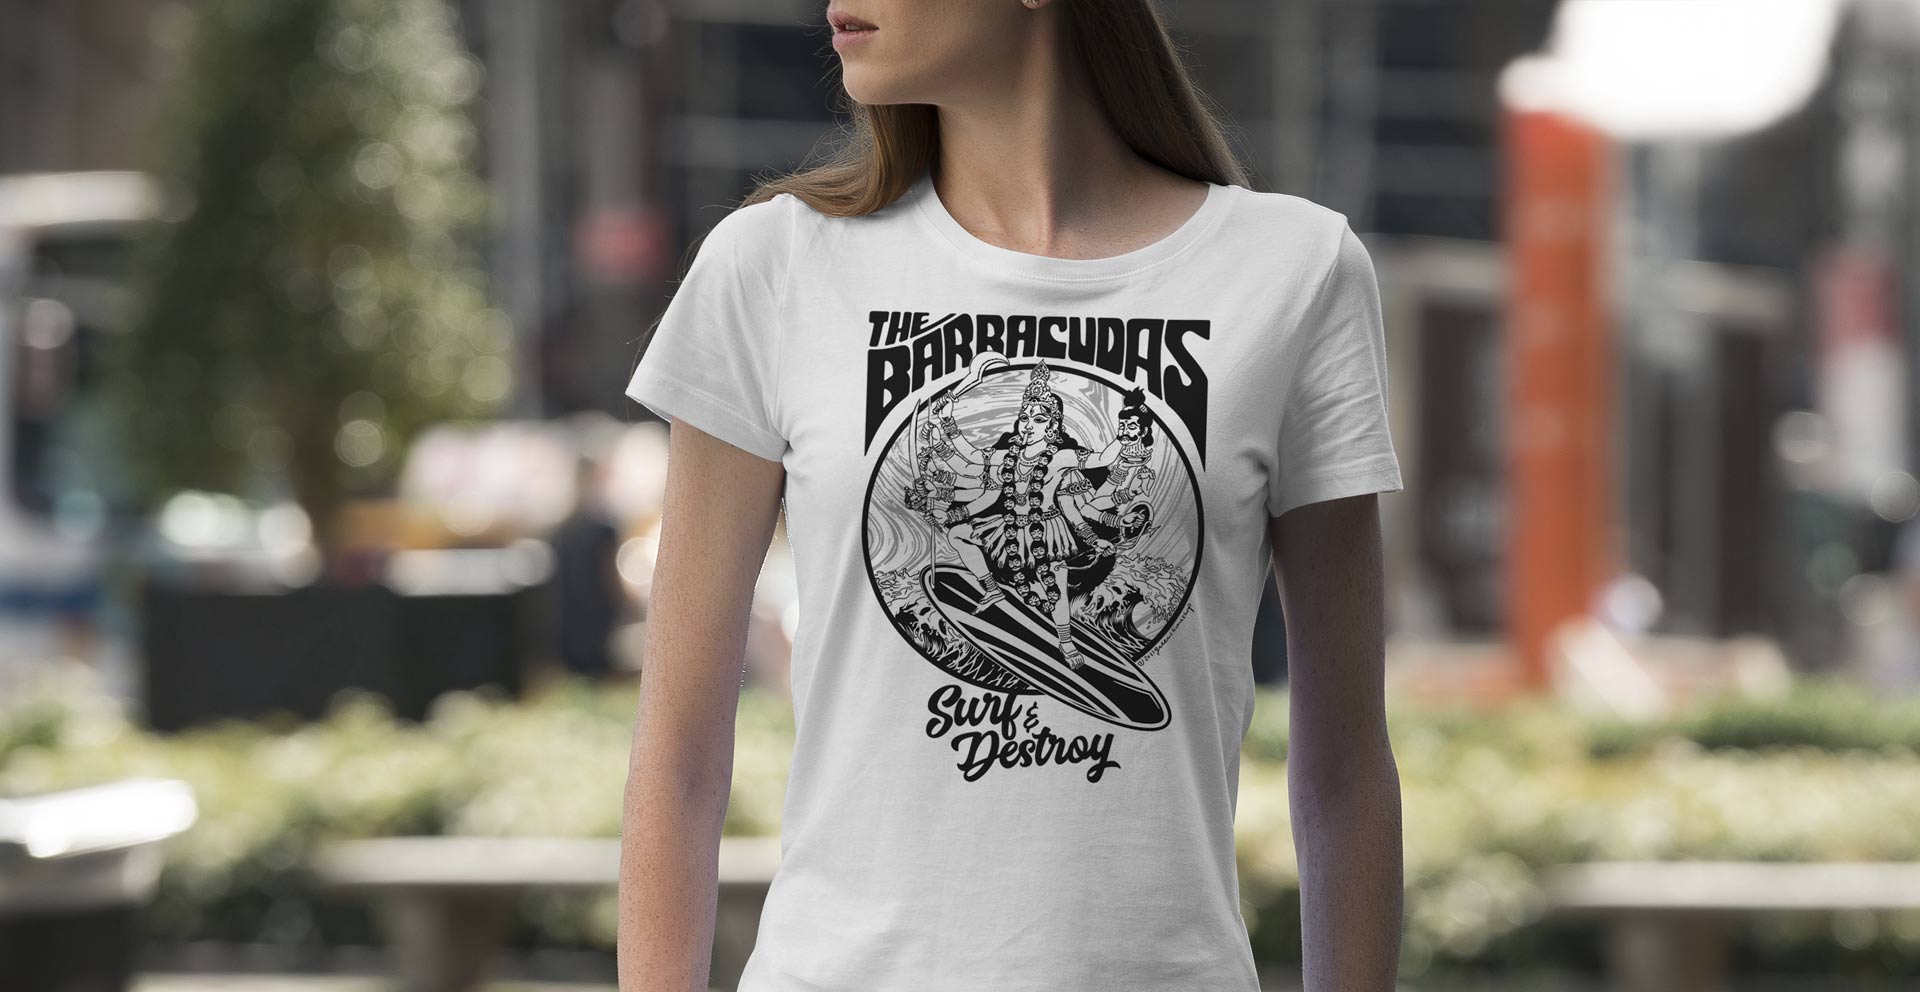 Barracudas Surf and destroy t-shirt